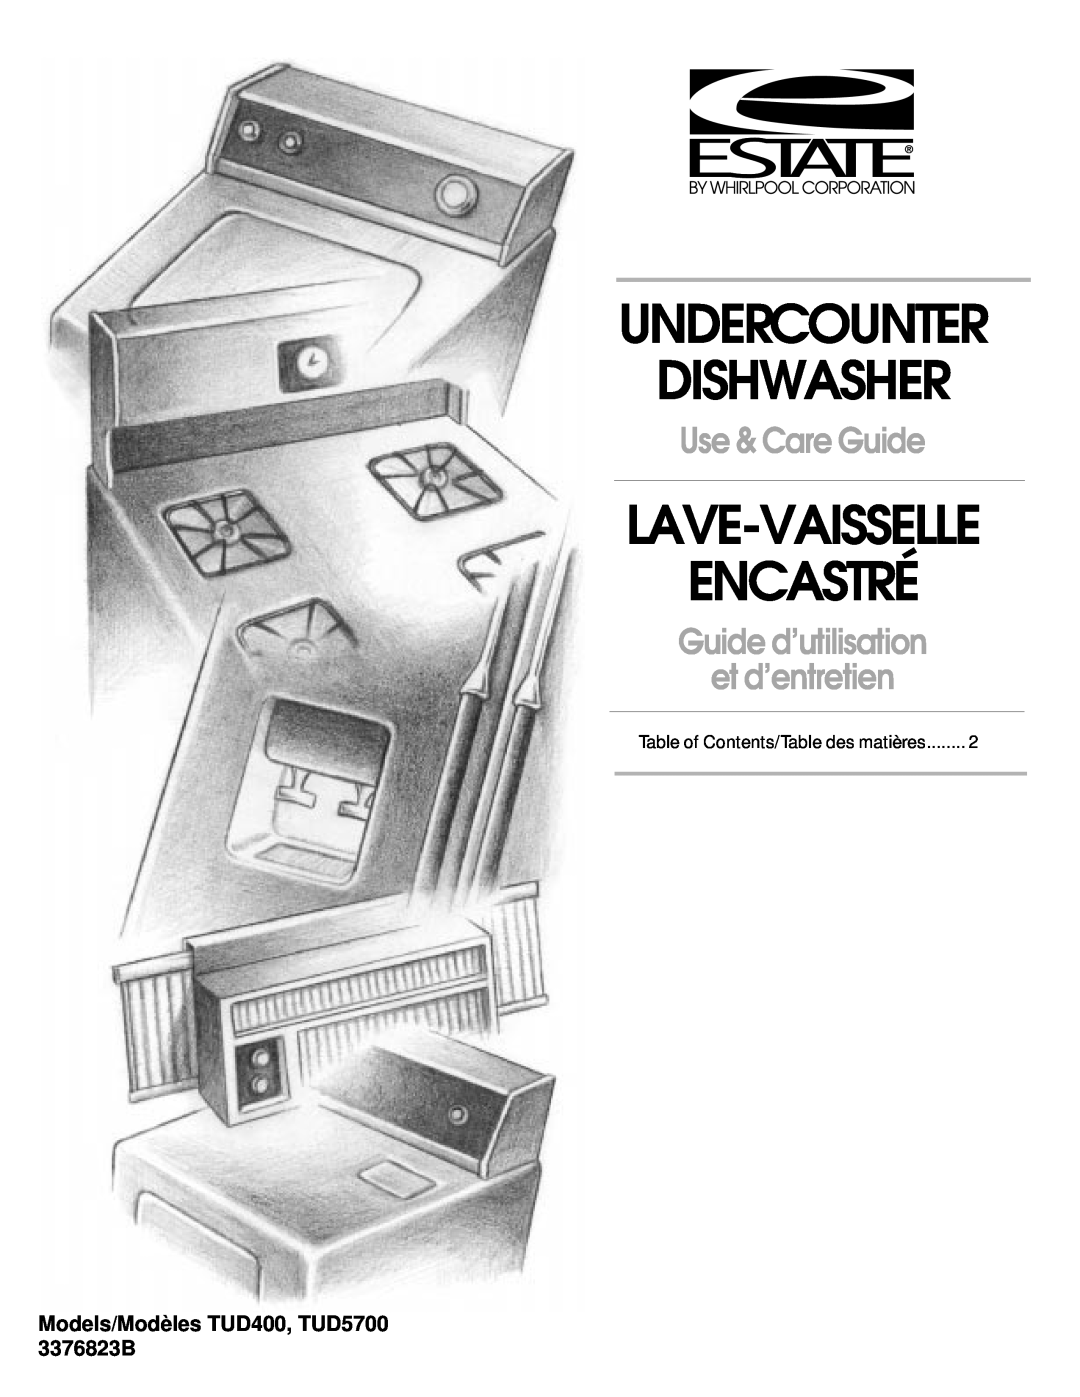 Whirlpool UNDERCOUNTER, TUD5700, TUD4700 manual Undercounter Dishwasher, Lave-Vaisselle Encastré, Use &Care Guide 